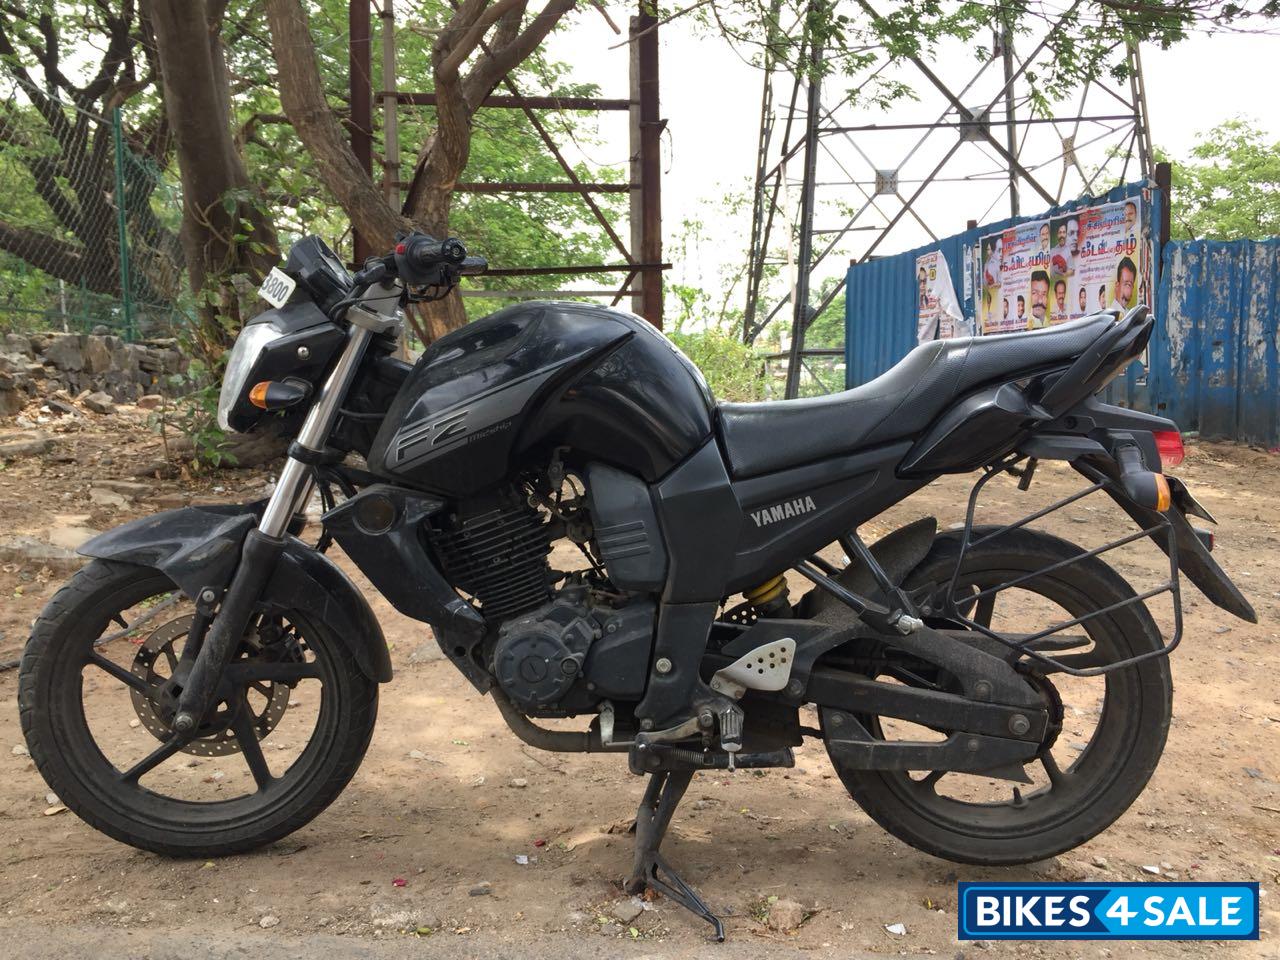 Used 2013 model Yamaha FZ16 for sale in Chennai. ID 171556 - Bikes4Sale